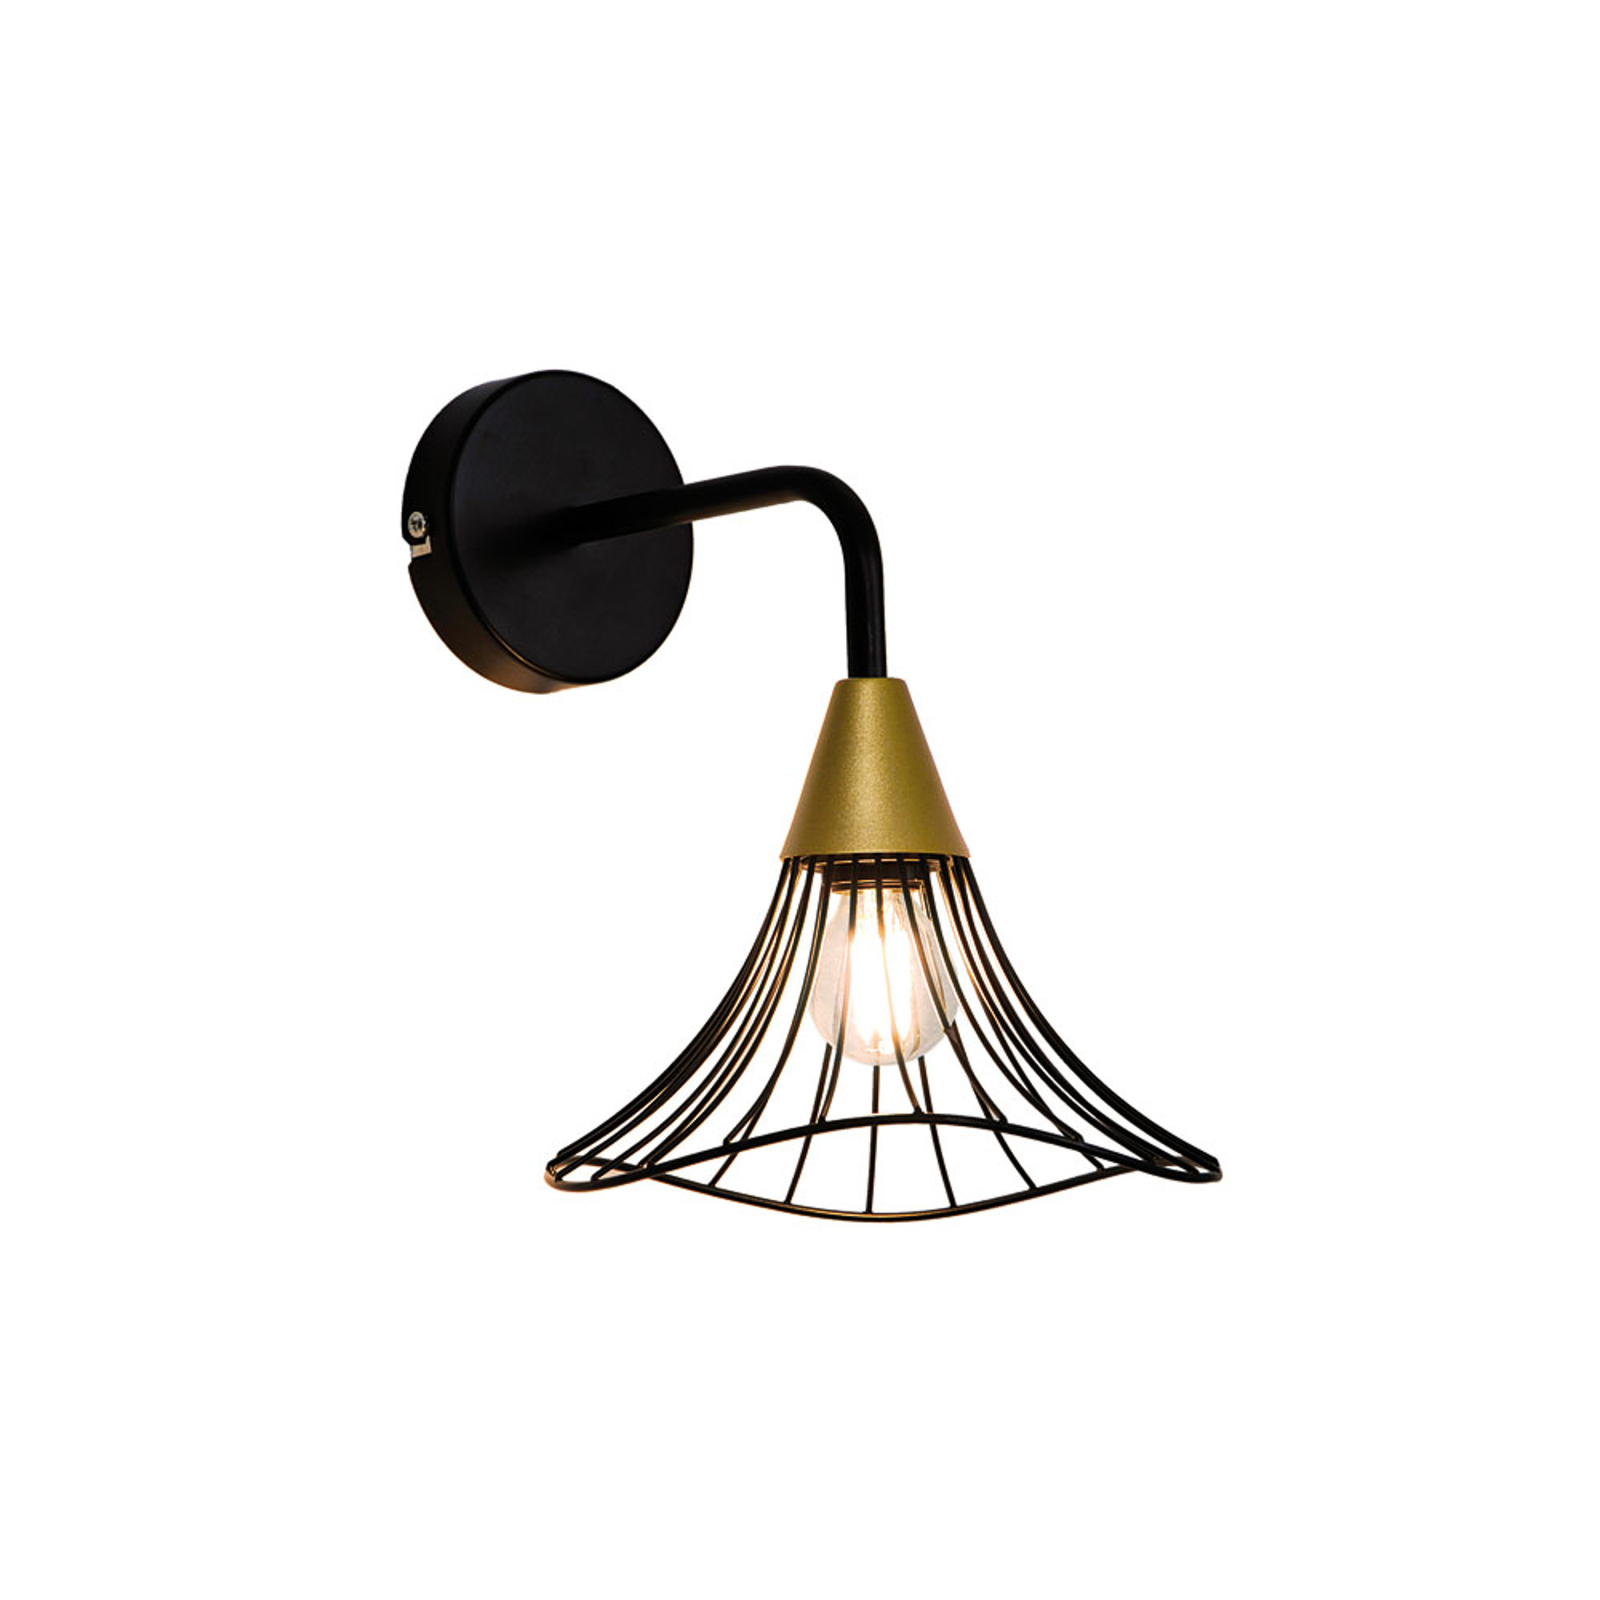 Tina wall lamp with a cage lampshade